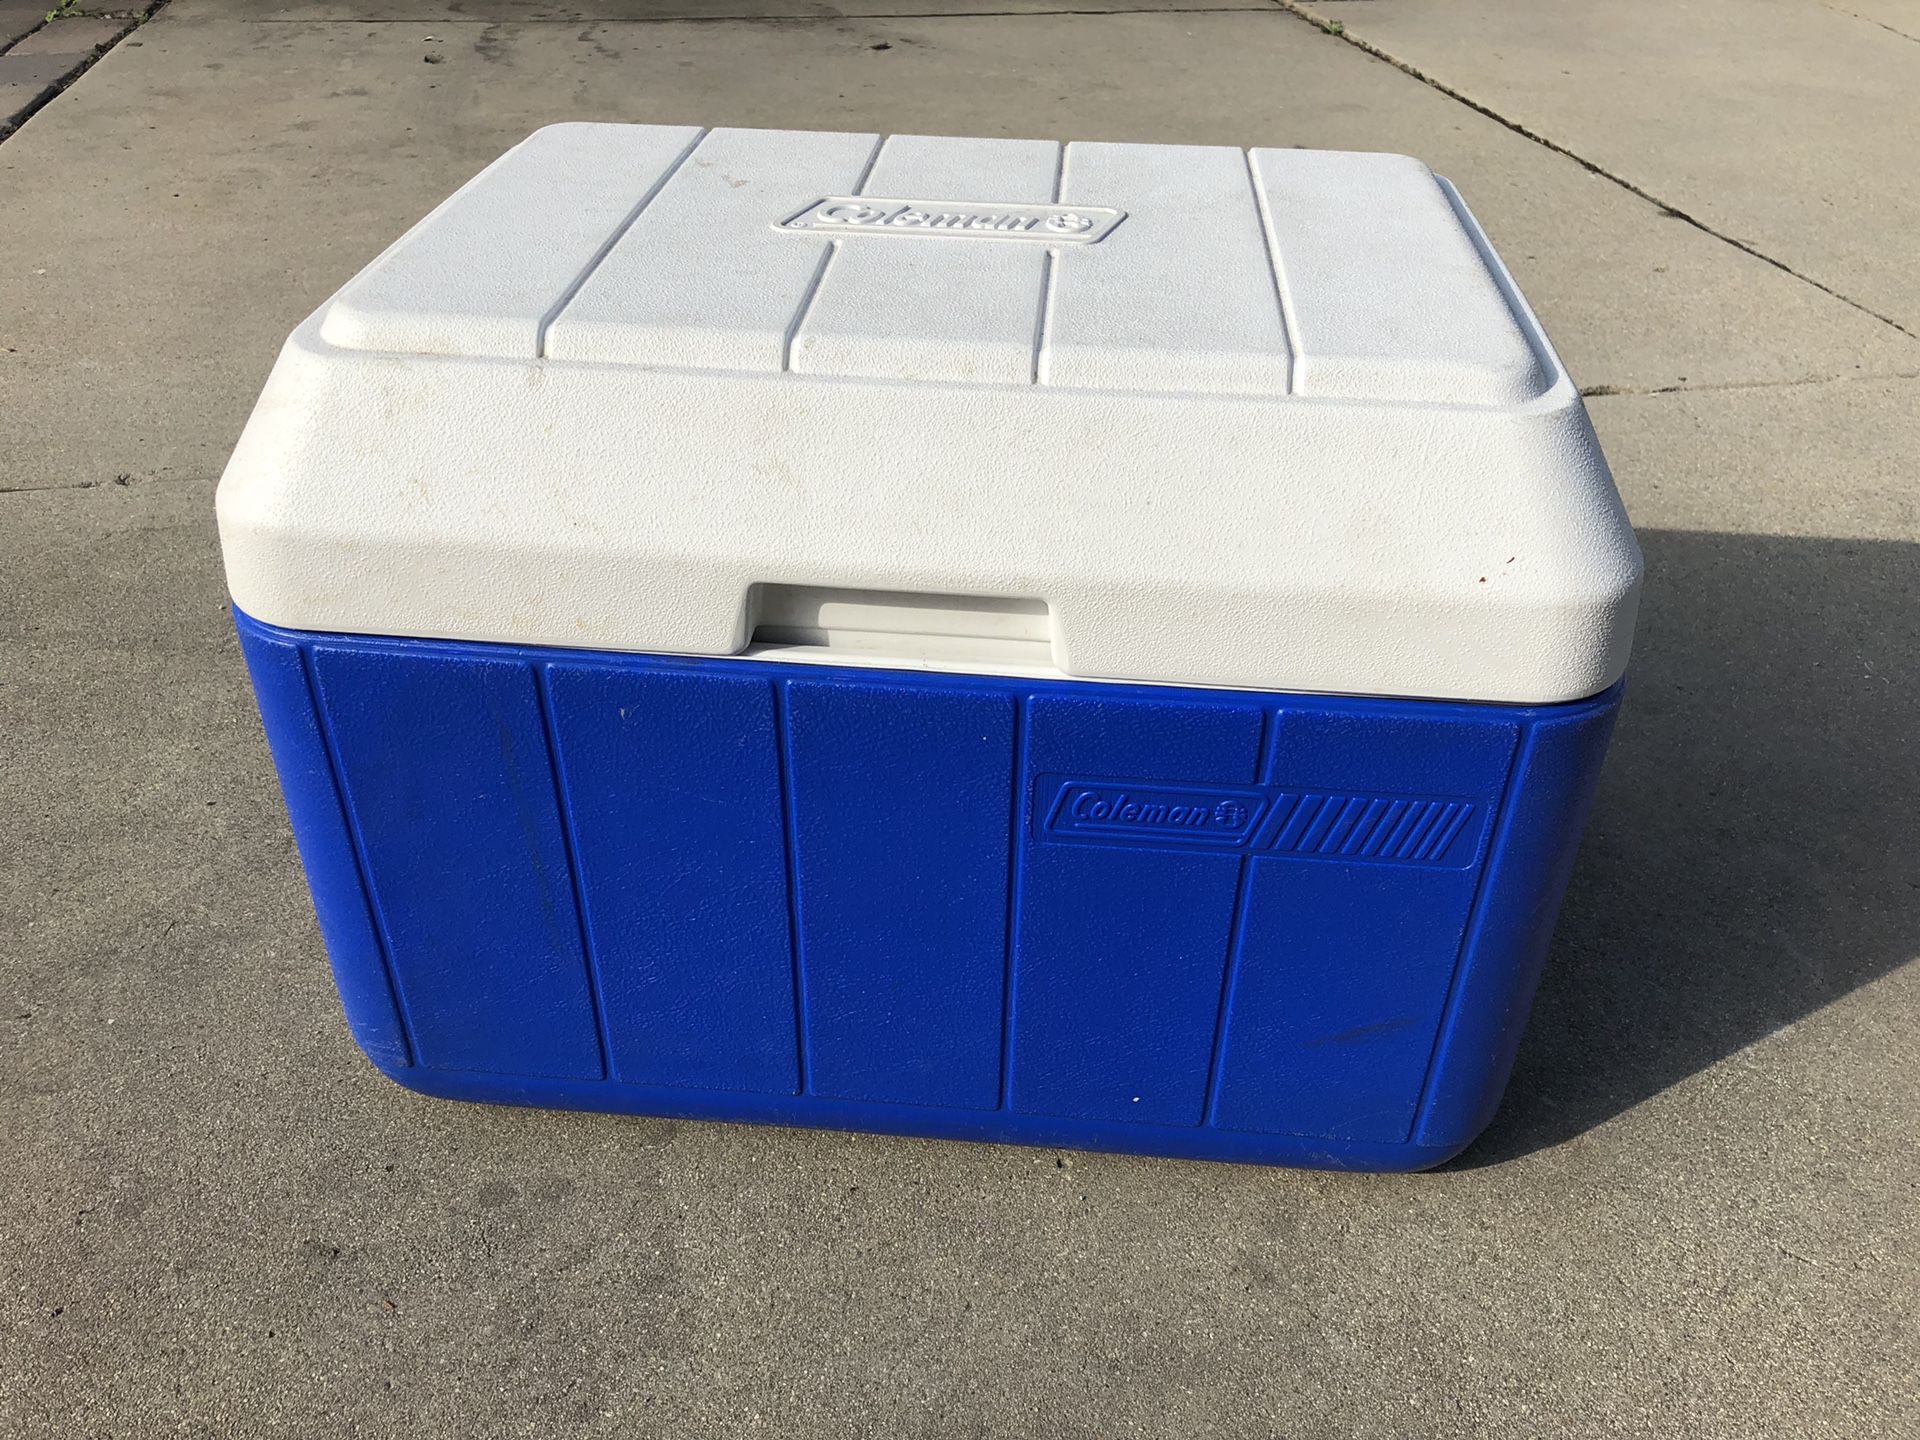 Colemon ice chest cooler